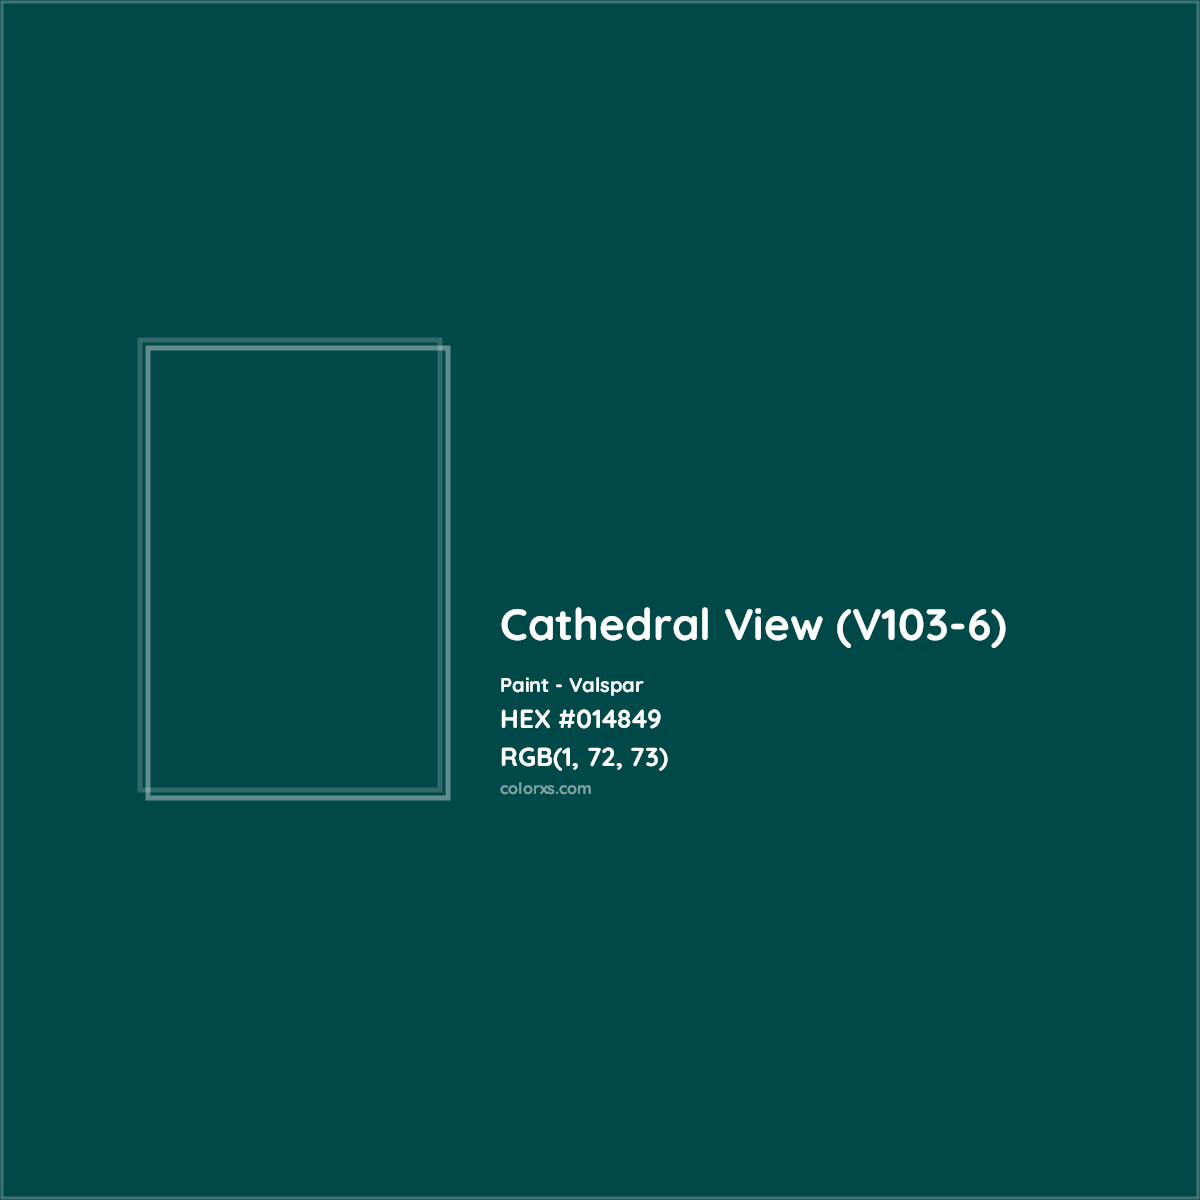 HEX #014849 Cathedral View (V103-6) Paint Valspar - Color Code